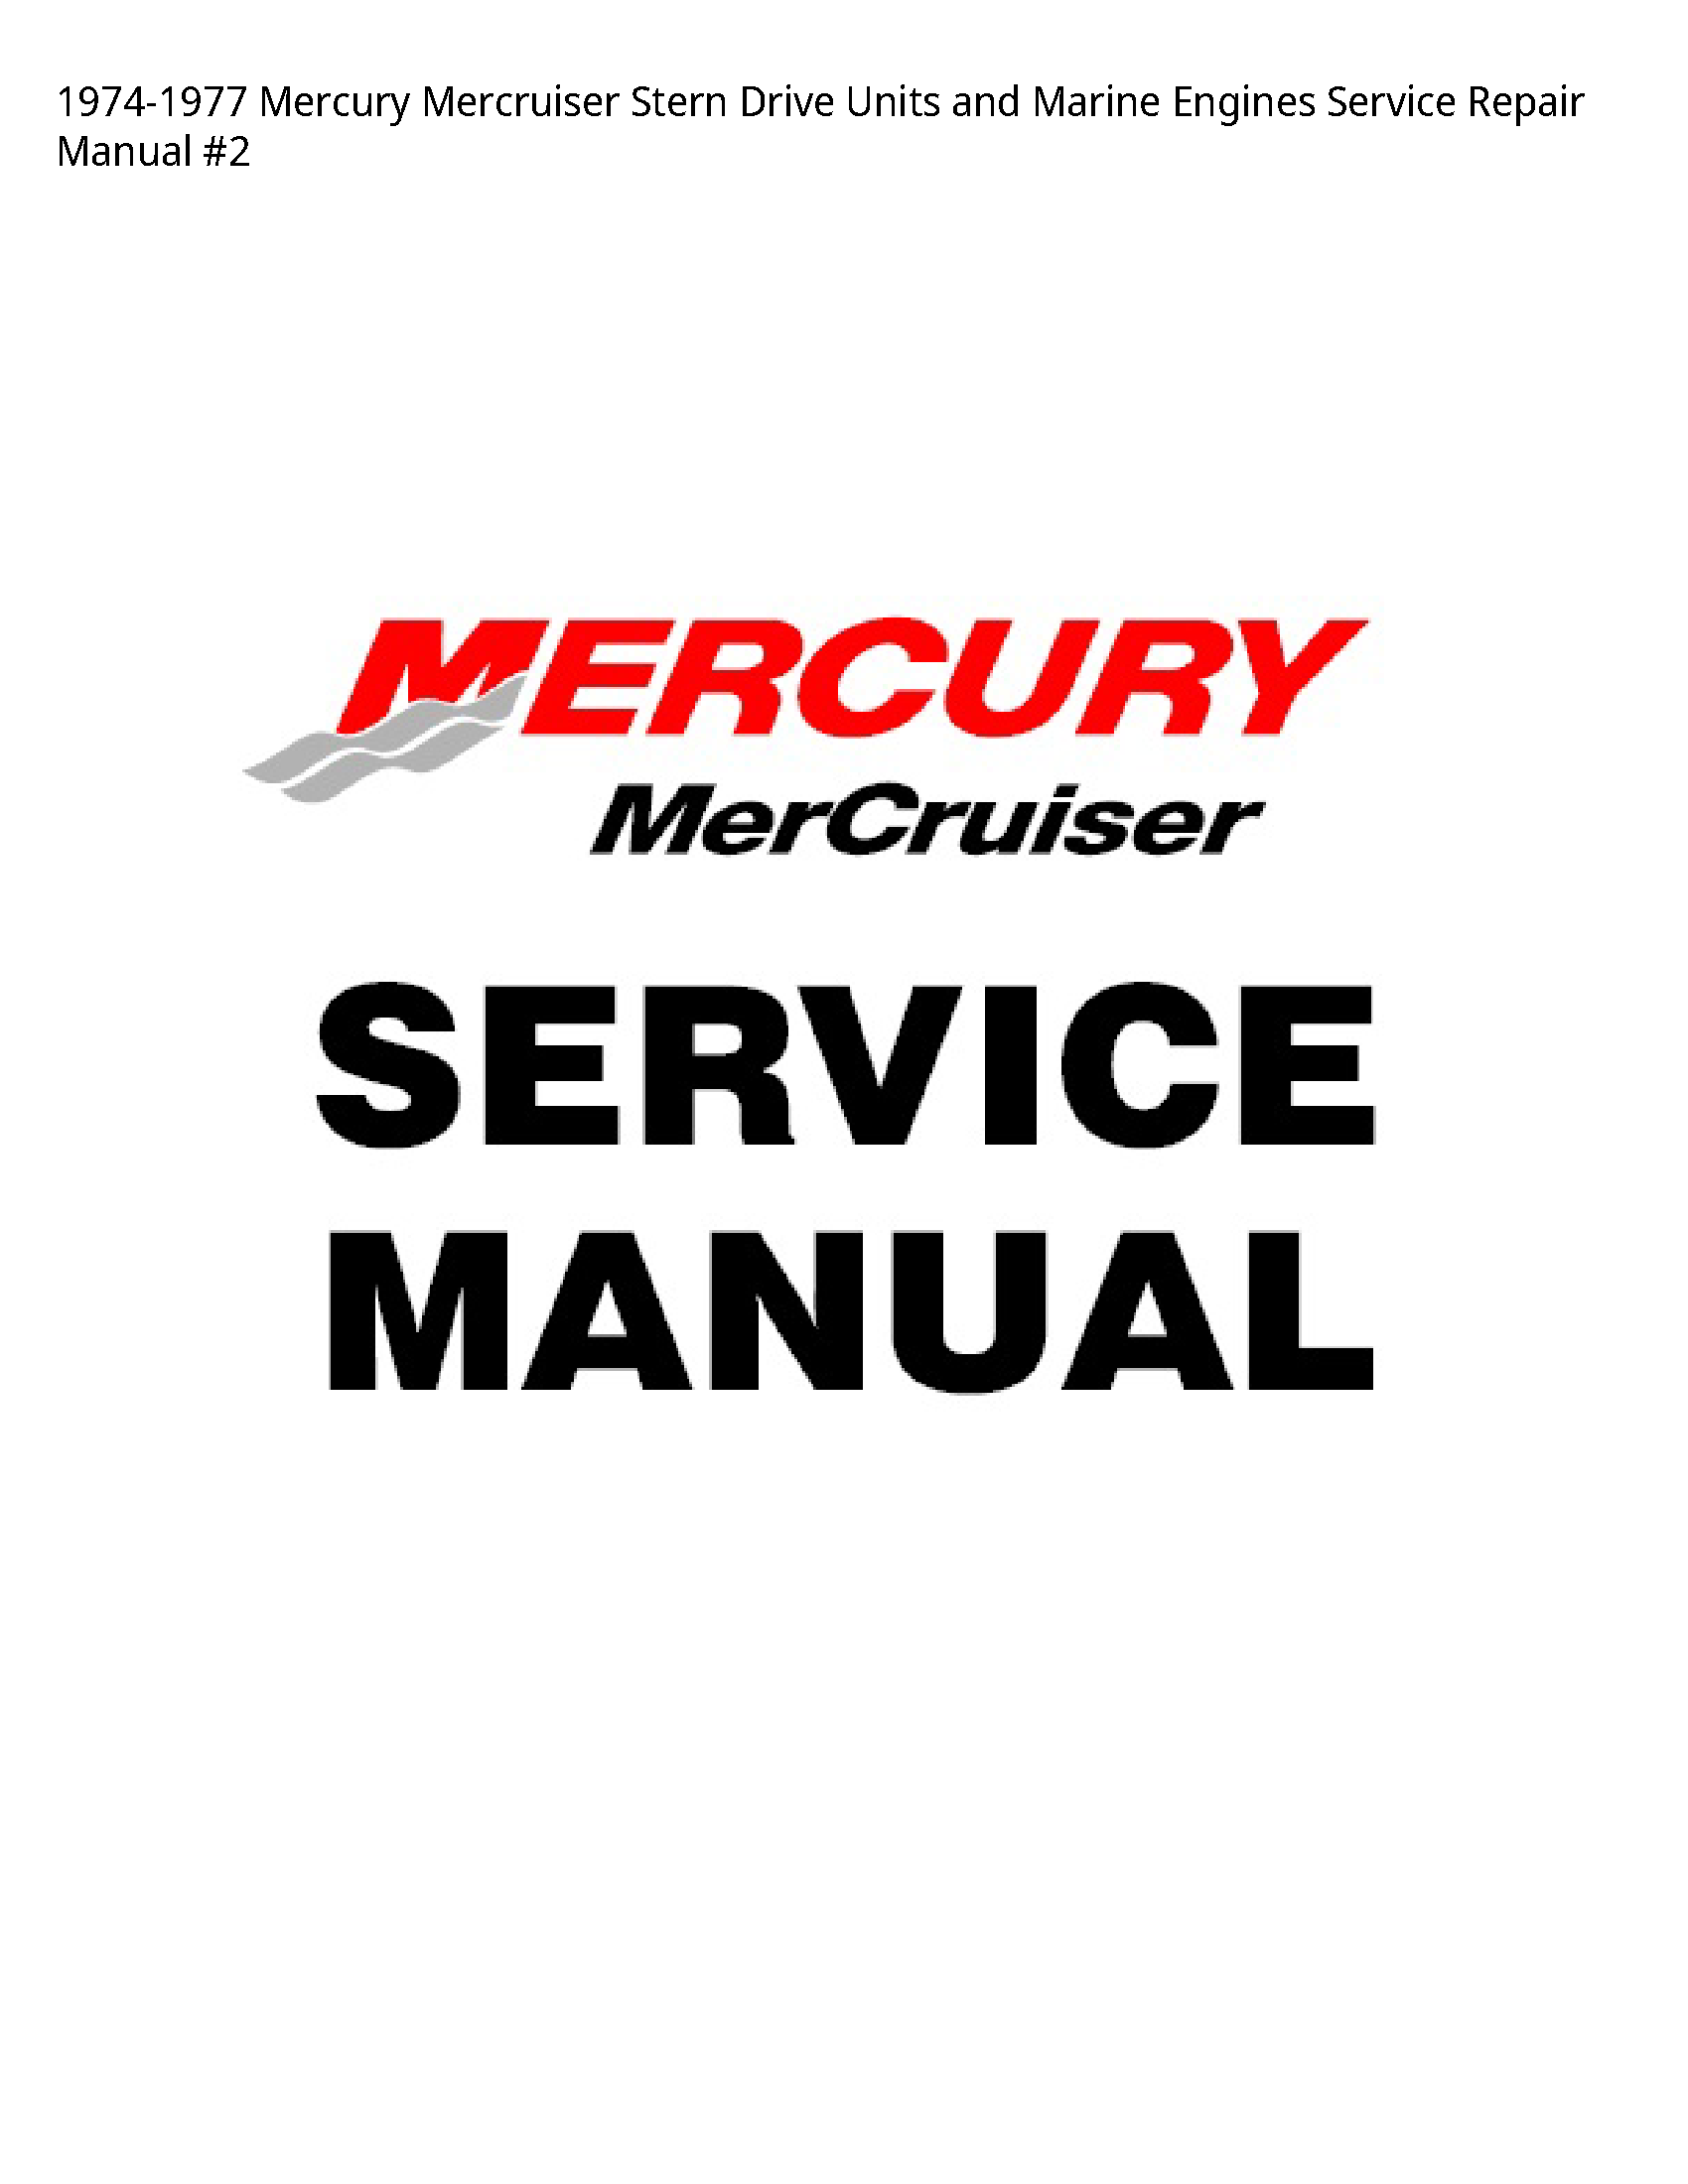 Mercury Mercruiser Stern Drive Units  Marine Engines manual